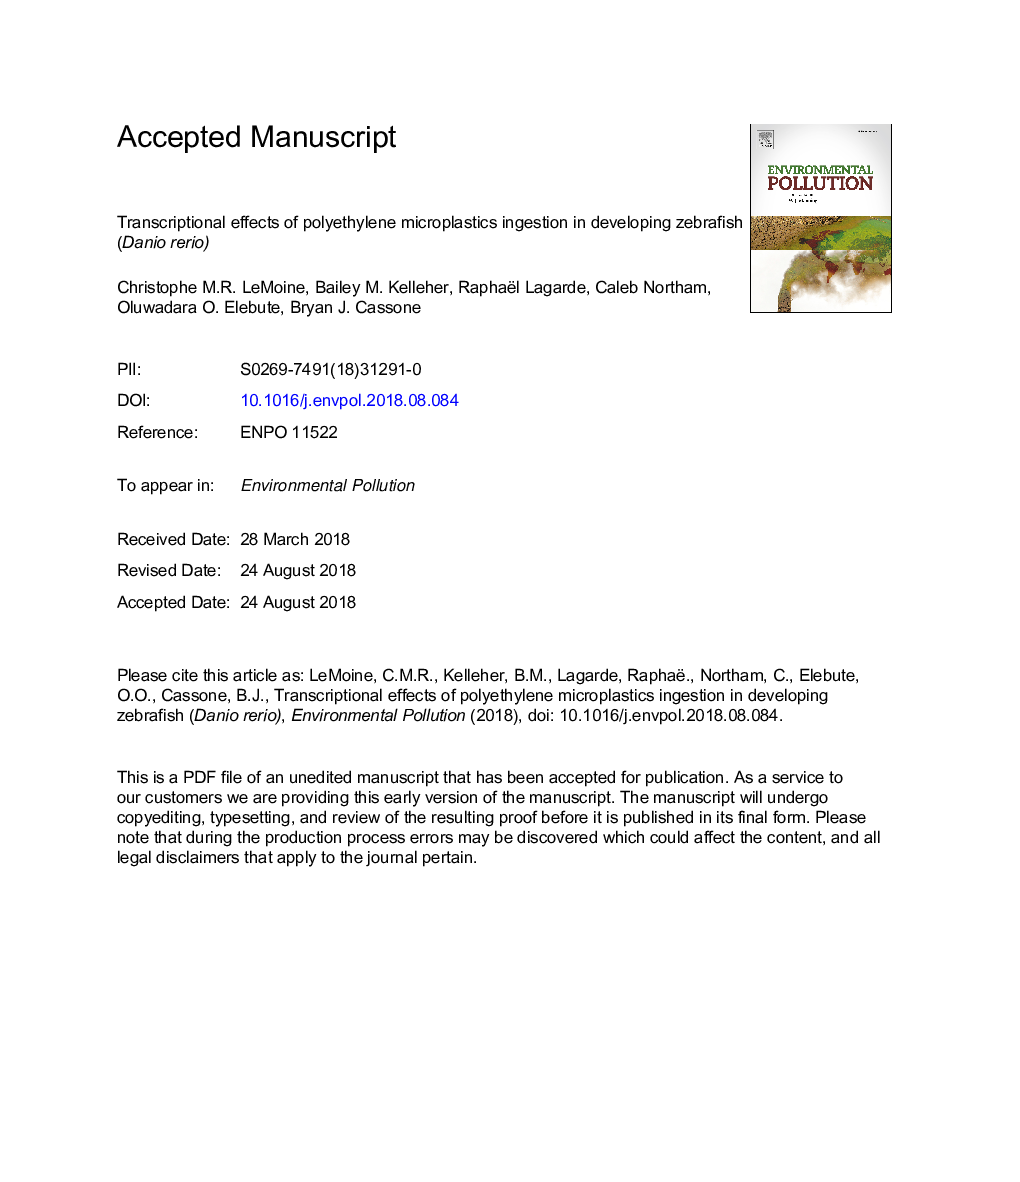 Transcriptional effects of polyethylene microplastics ingestion in developing zebrafish (Danio rerio)